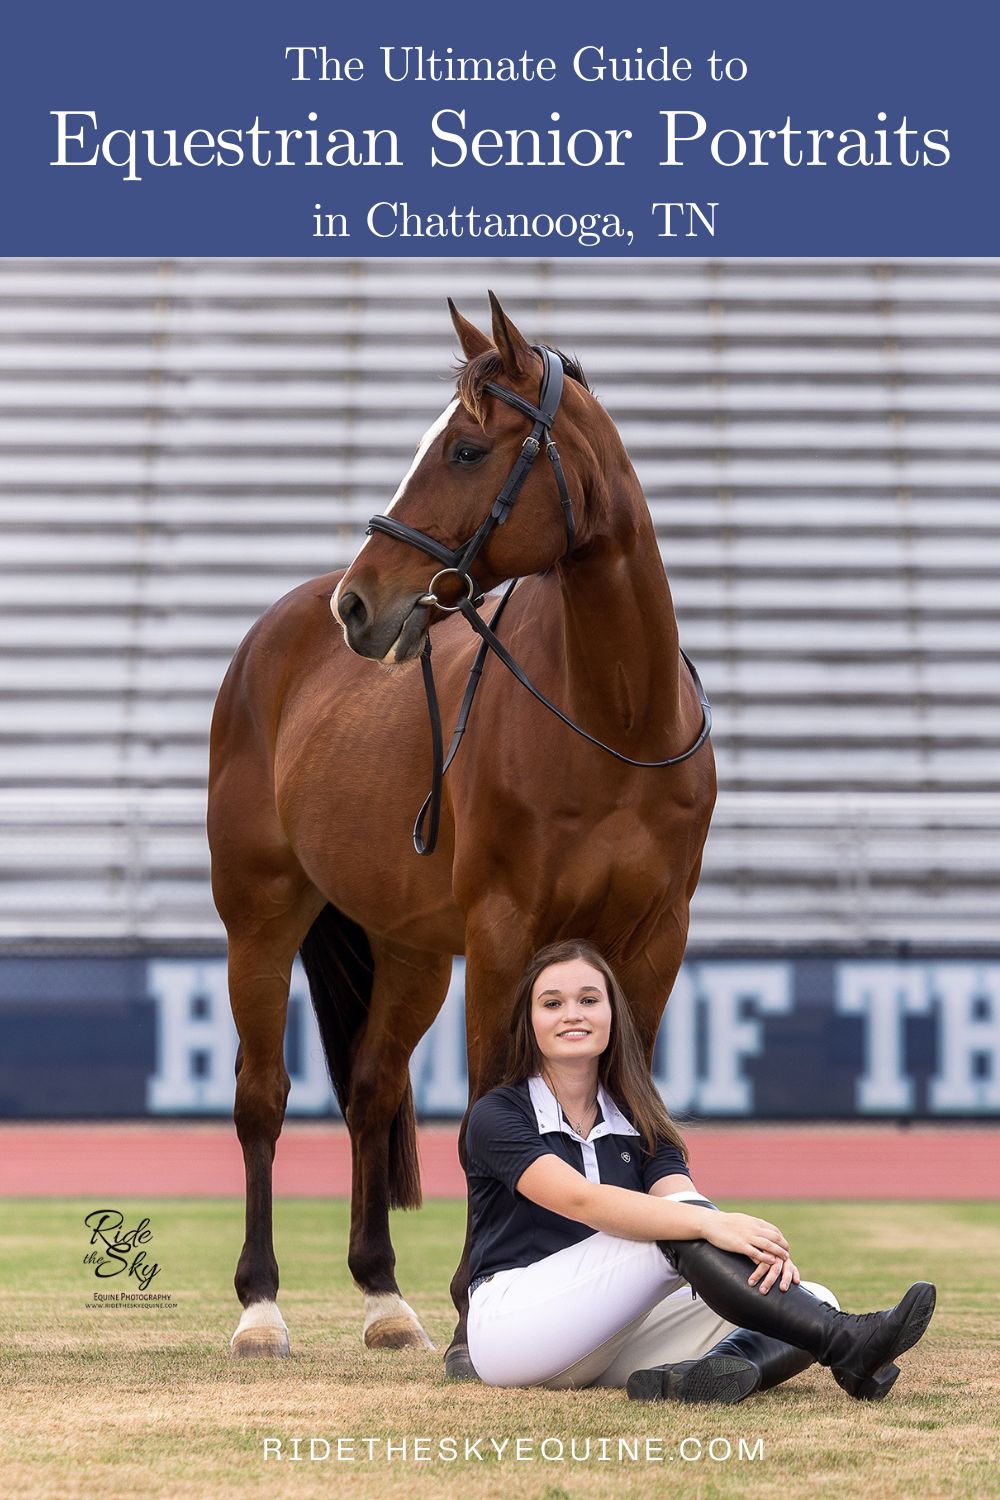 High School Senior sitting with her horse in high school football stadium